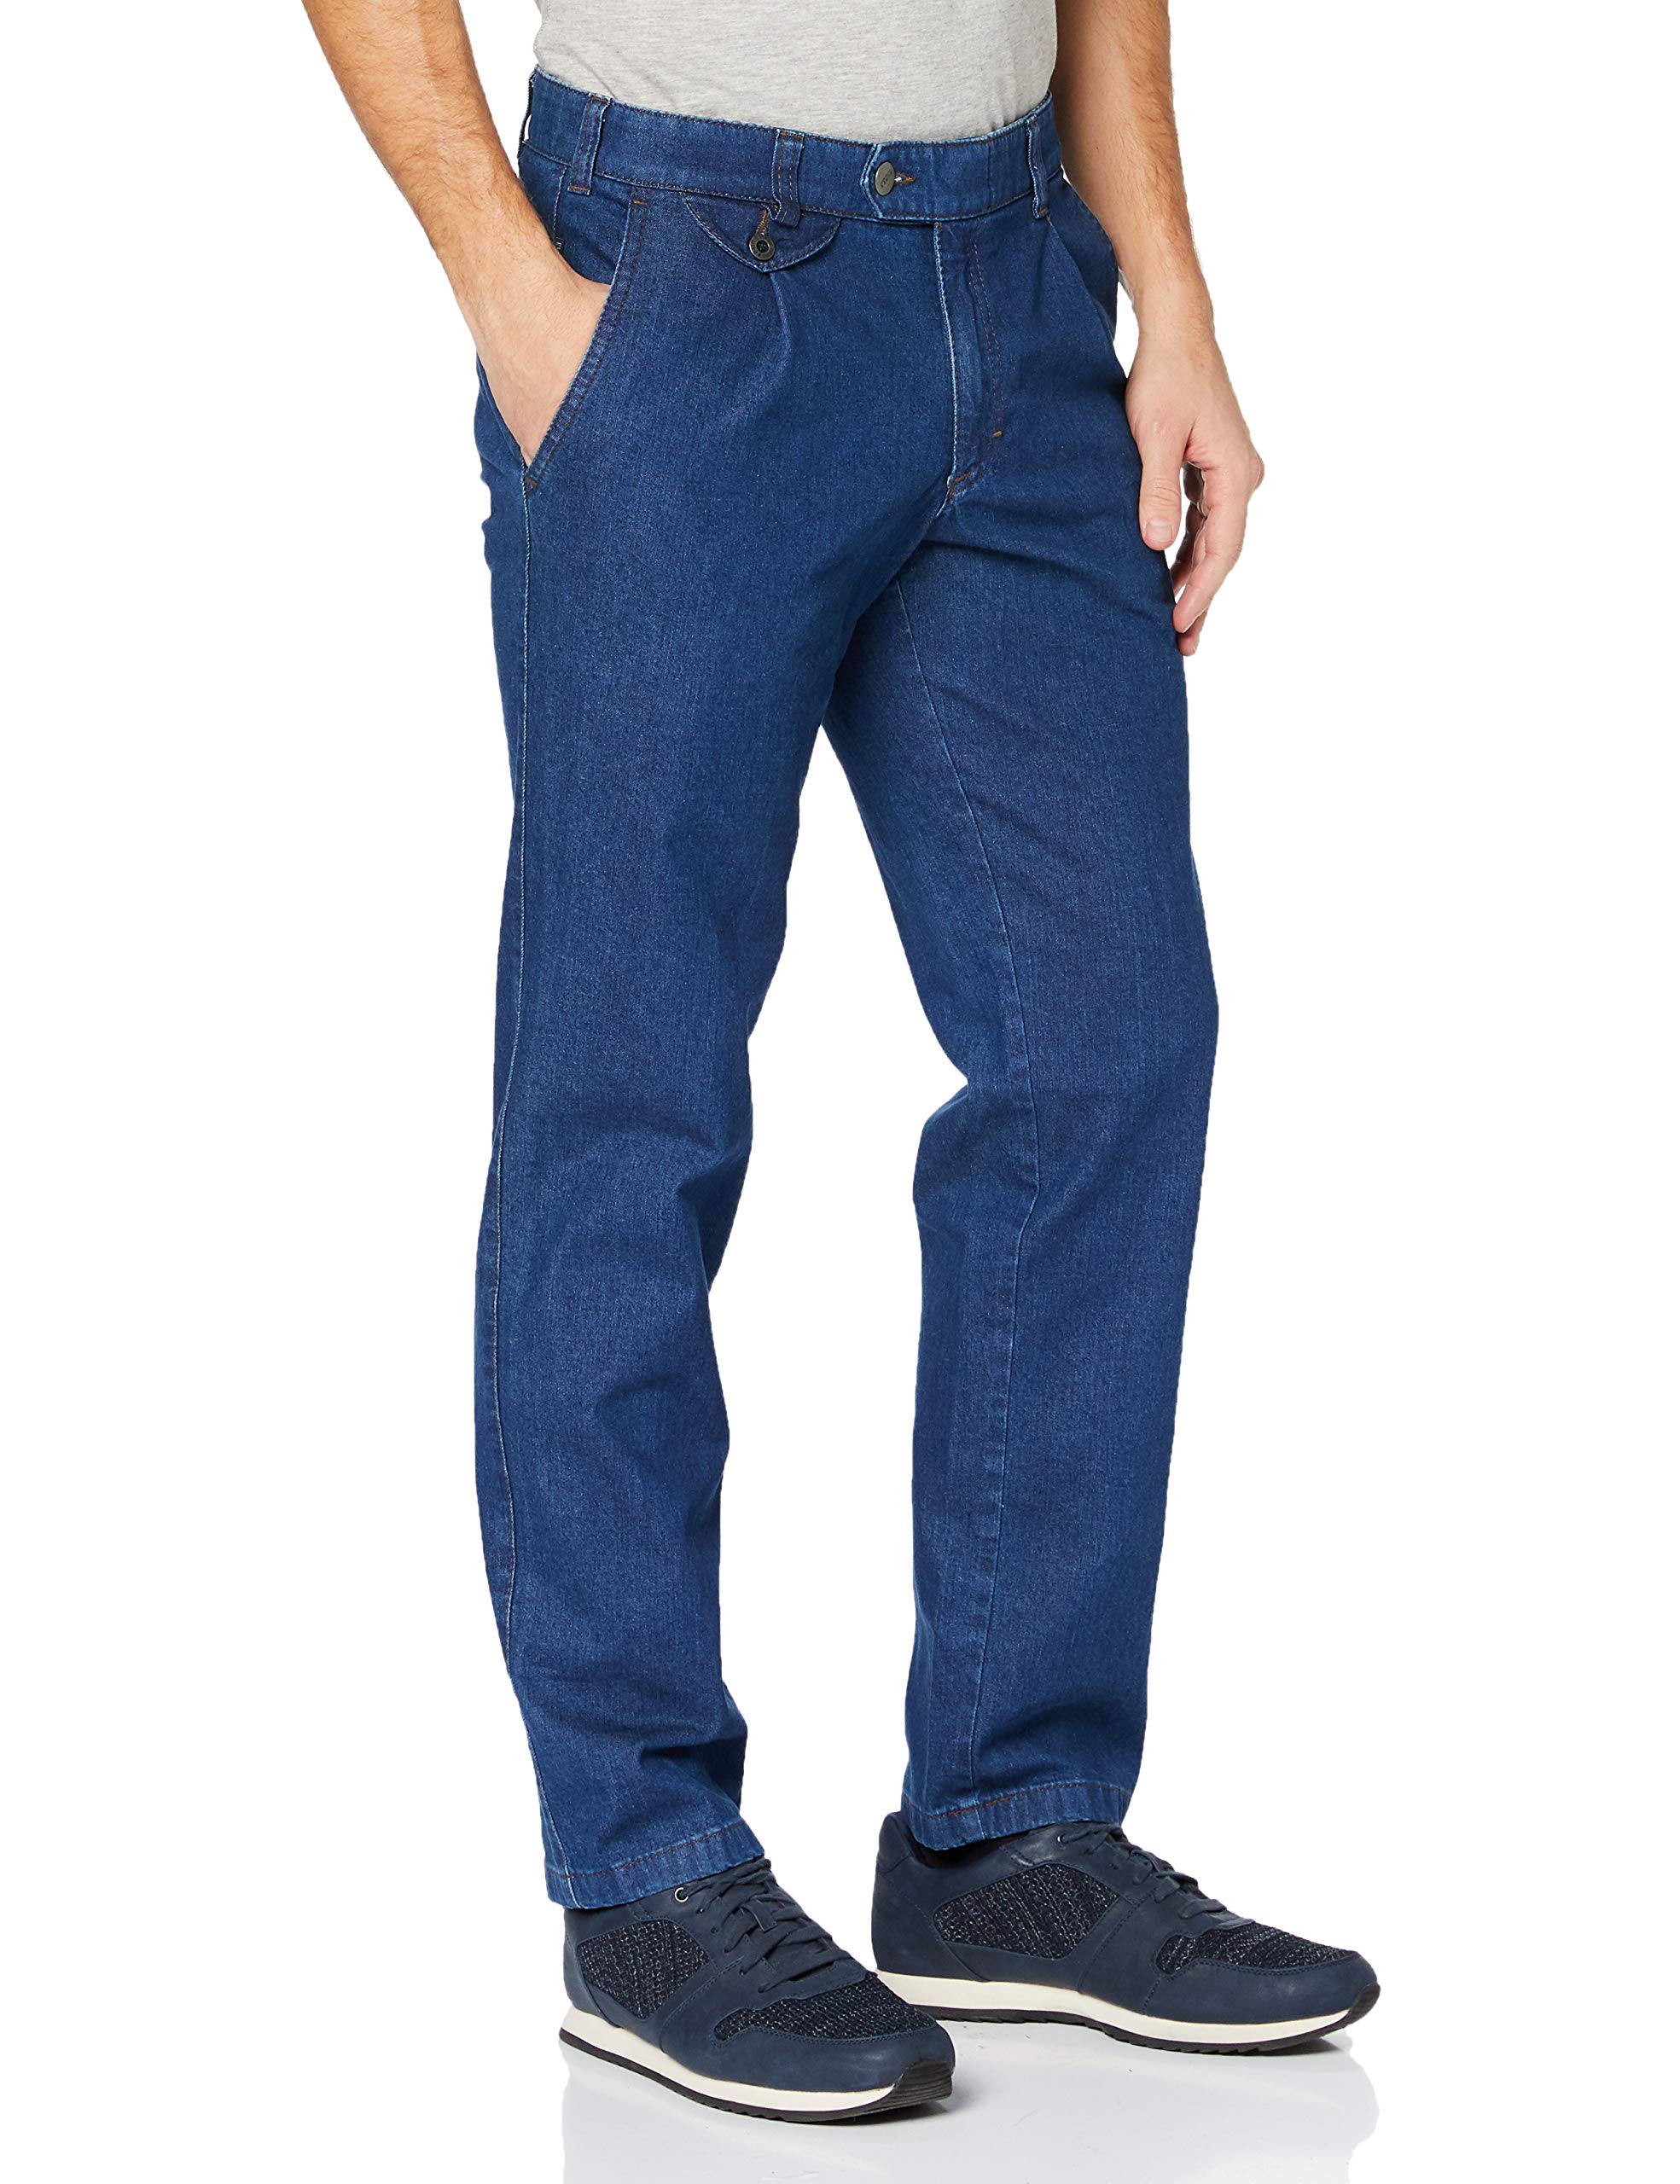 Eurex by Brax Herren Style Fred Jeans, Blau 22, 38W / 34L EU